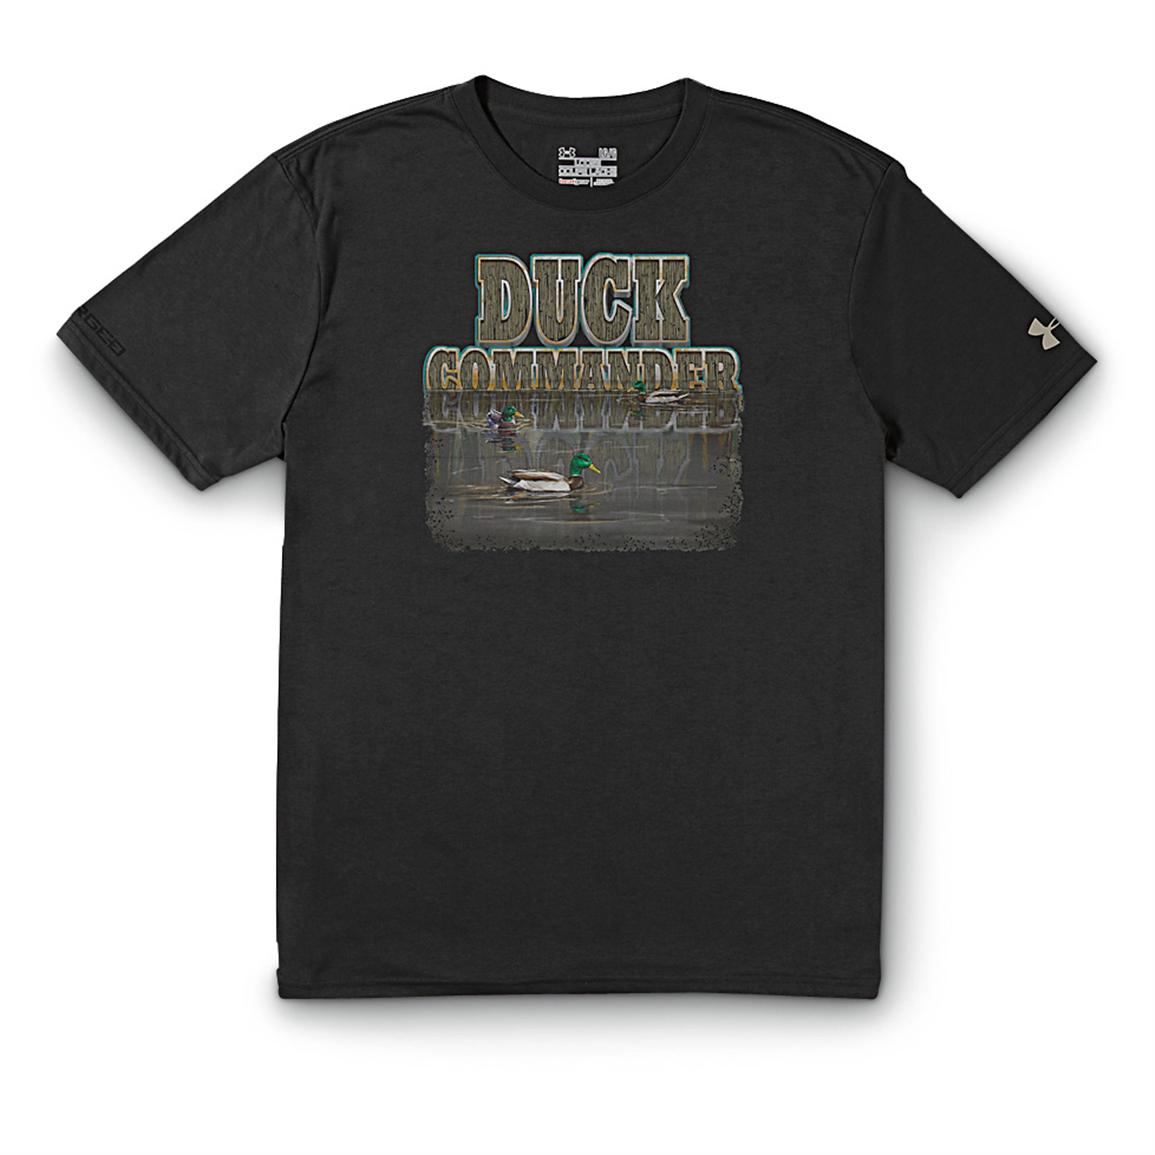 Under Armour Duck Commander Swamp T-Shirt, Black